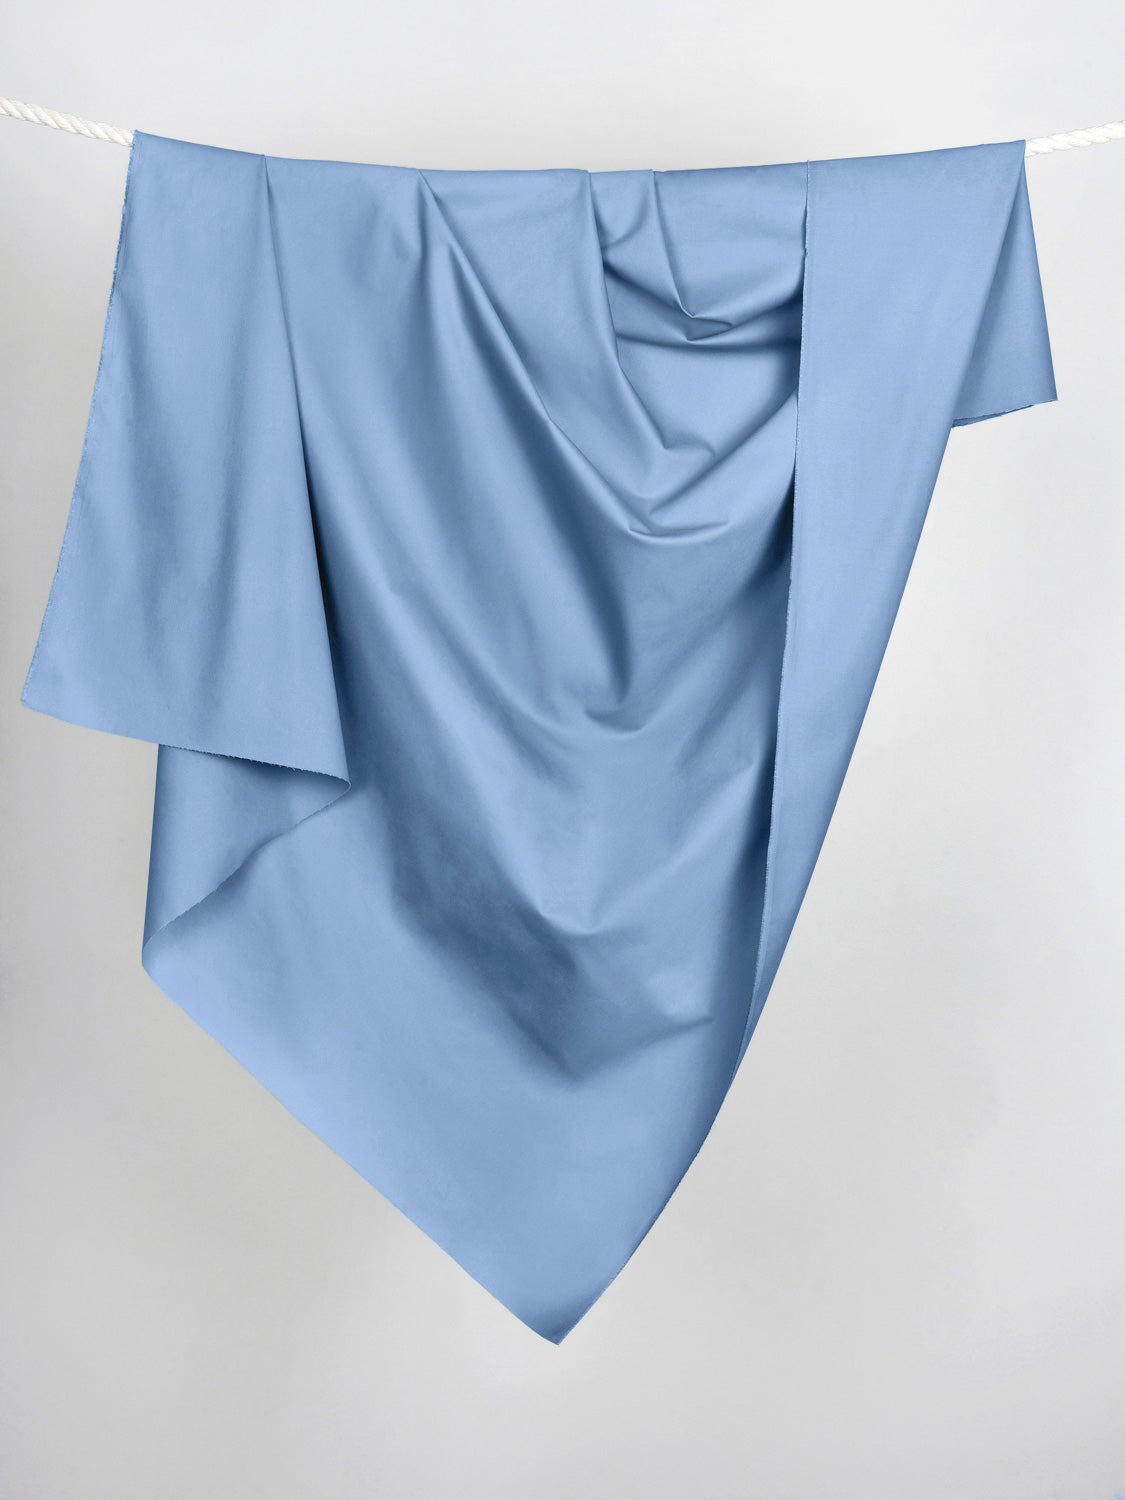 Midweight Organic Cotton Twill - Ice Blue | Core Fabrics